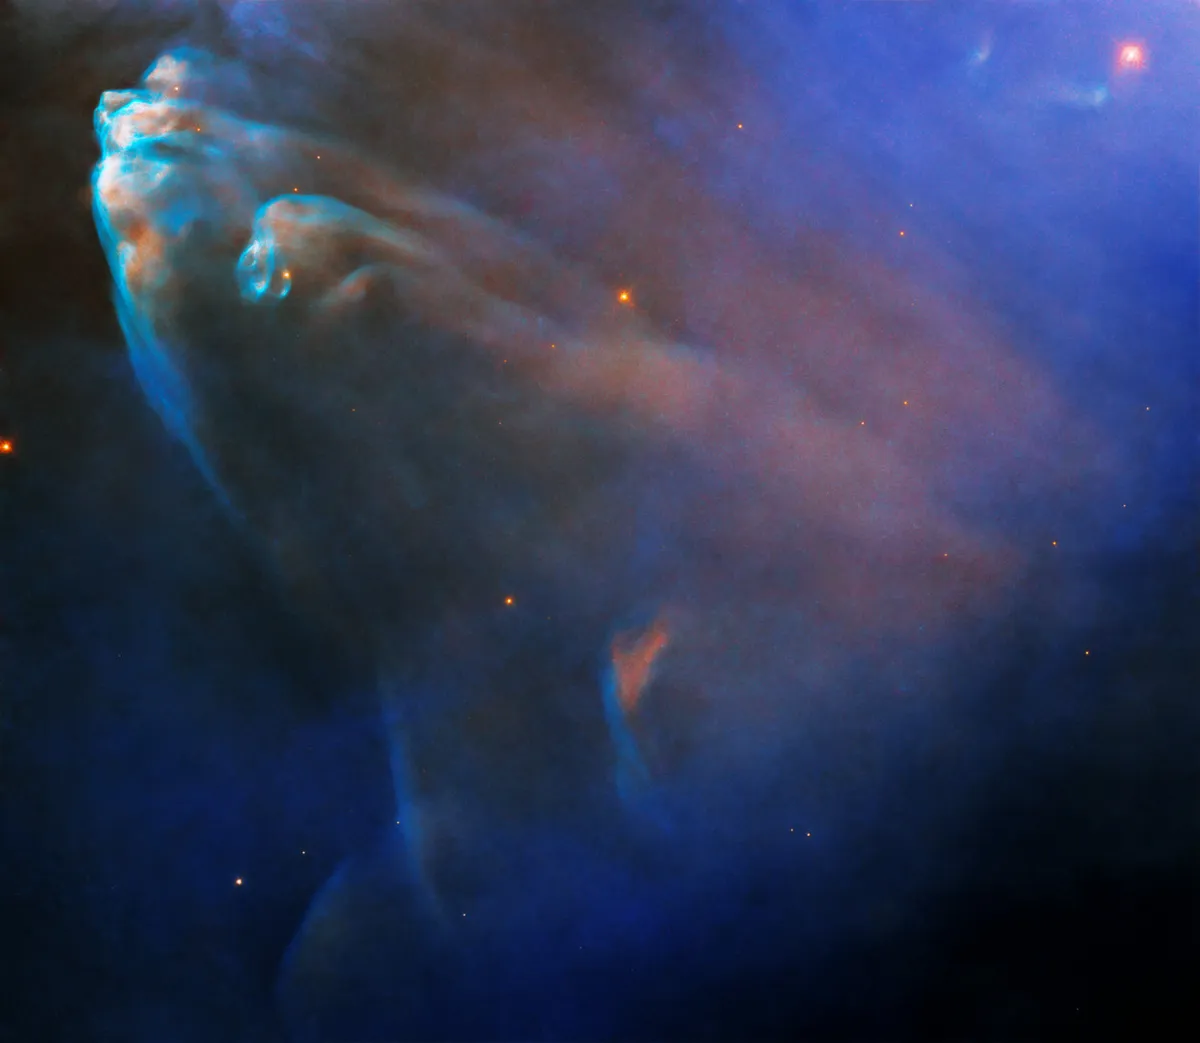 Herbig-Haro object HH 45 in the Running Man Nebula HUBBLE SPACE TELESCOPE, 24 NOVEMBER 2021 IMAGE CREDIT: NASA, ESA, J. Bally (University of Colorado at Boulder), and DSS; Processing: Gladys Kober (NASA/Catholic University of America)